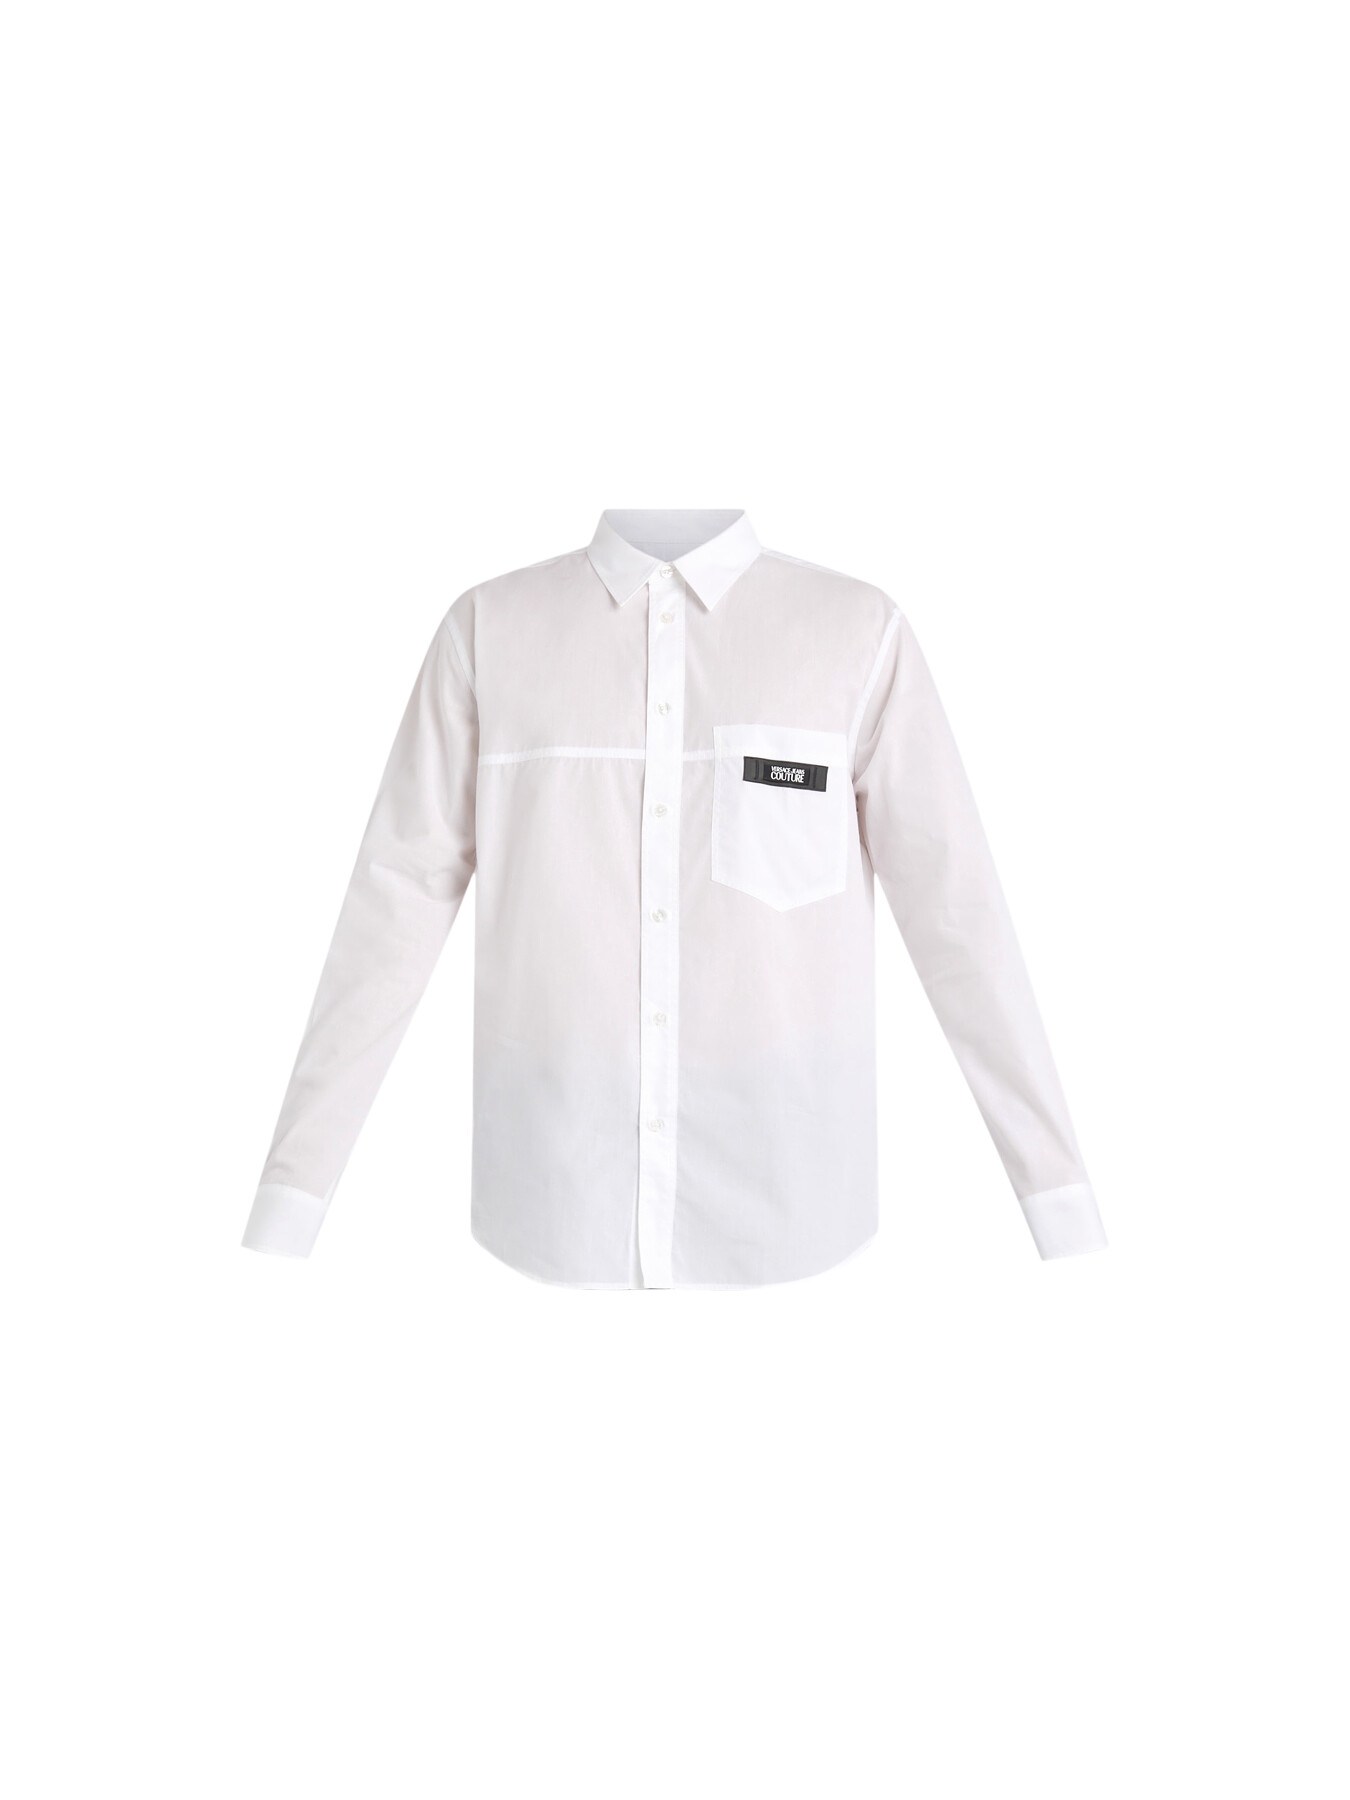 Versace Jeans Men's Longsleeve Patch Shirt In White